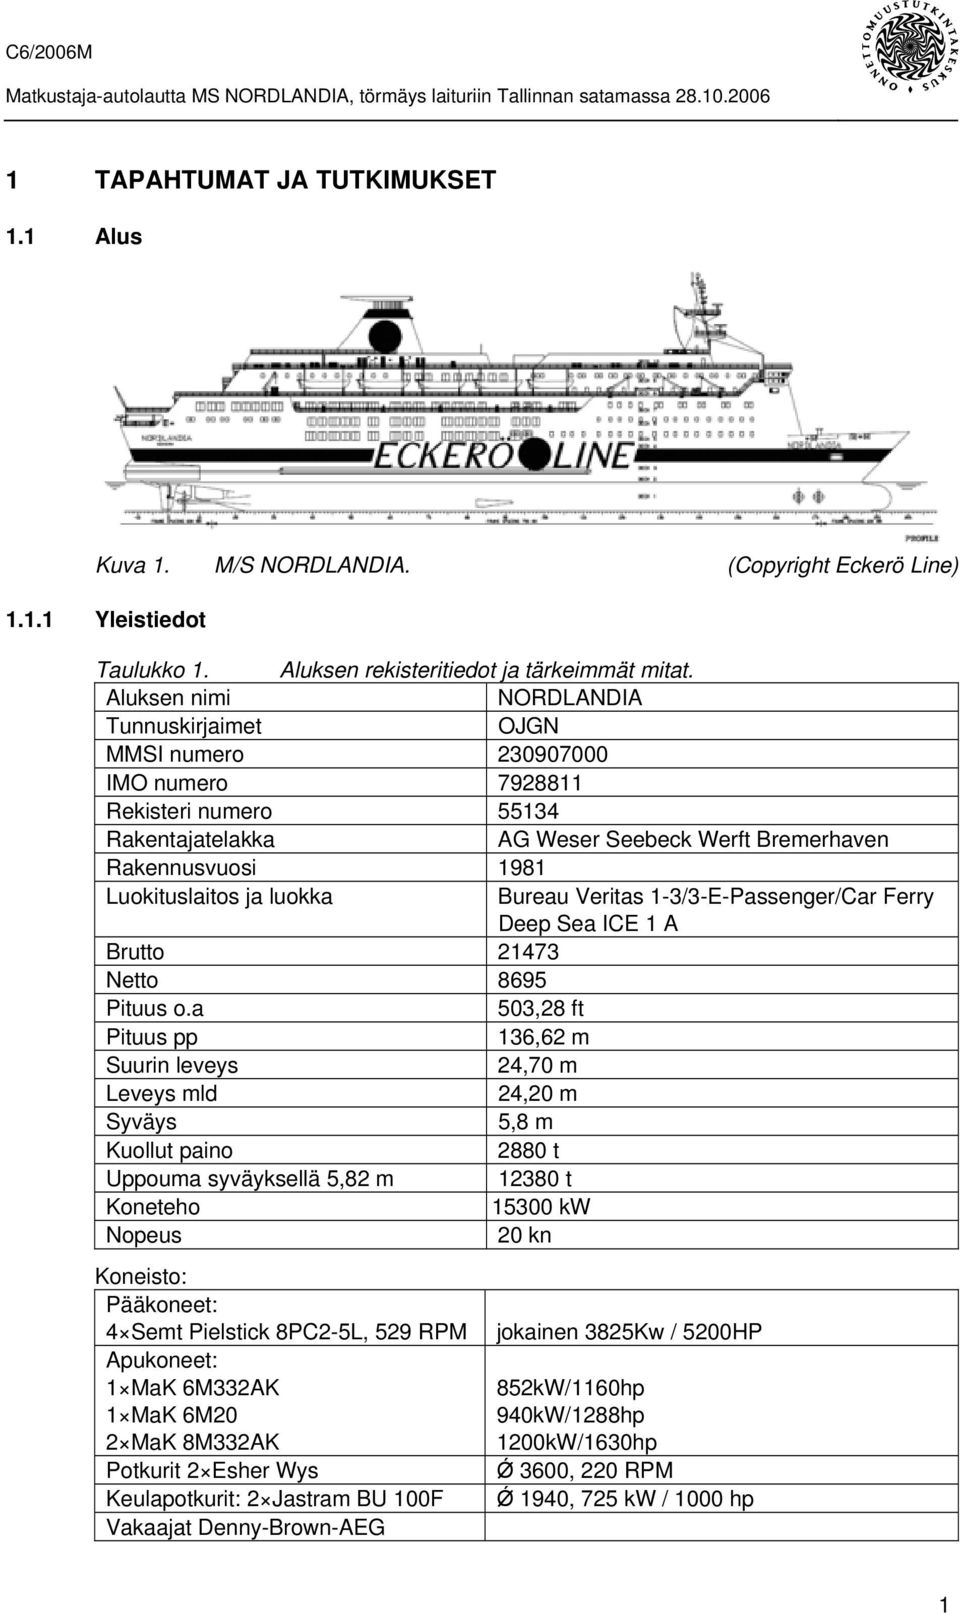 luokka Bureau Veritas 1-3/3-E-Passenger/Car Ferry Deep Sea ICE 1 A Brutto 21473 Netto 8695 Pituus o.